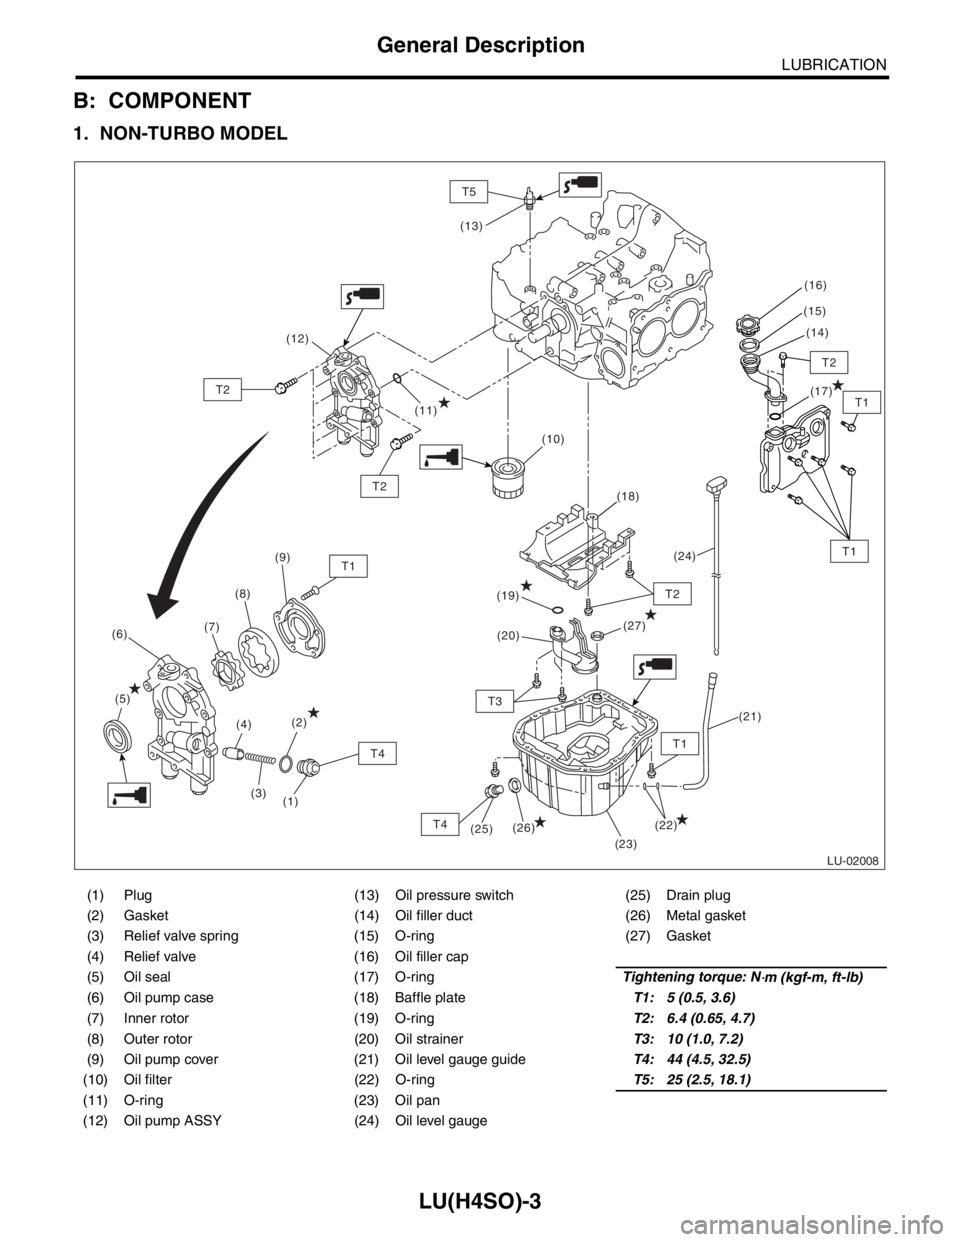 SUBARU FORESTER 2004  Service User Guide LU(H4SO)-3
LUBRICATION
General Description
B: COMPONENT
1. NON-TURBO MODEL
(1) Plug (13) Oil pressure switch (25) Drain plug
(2) Gasket (14) Oil filler duct (26) Metal gasket
(3) Relief valve spring (